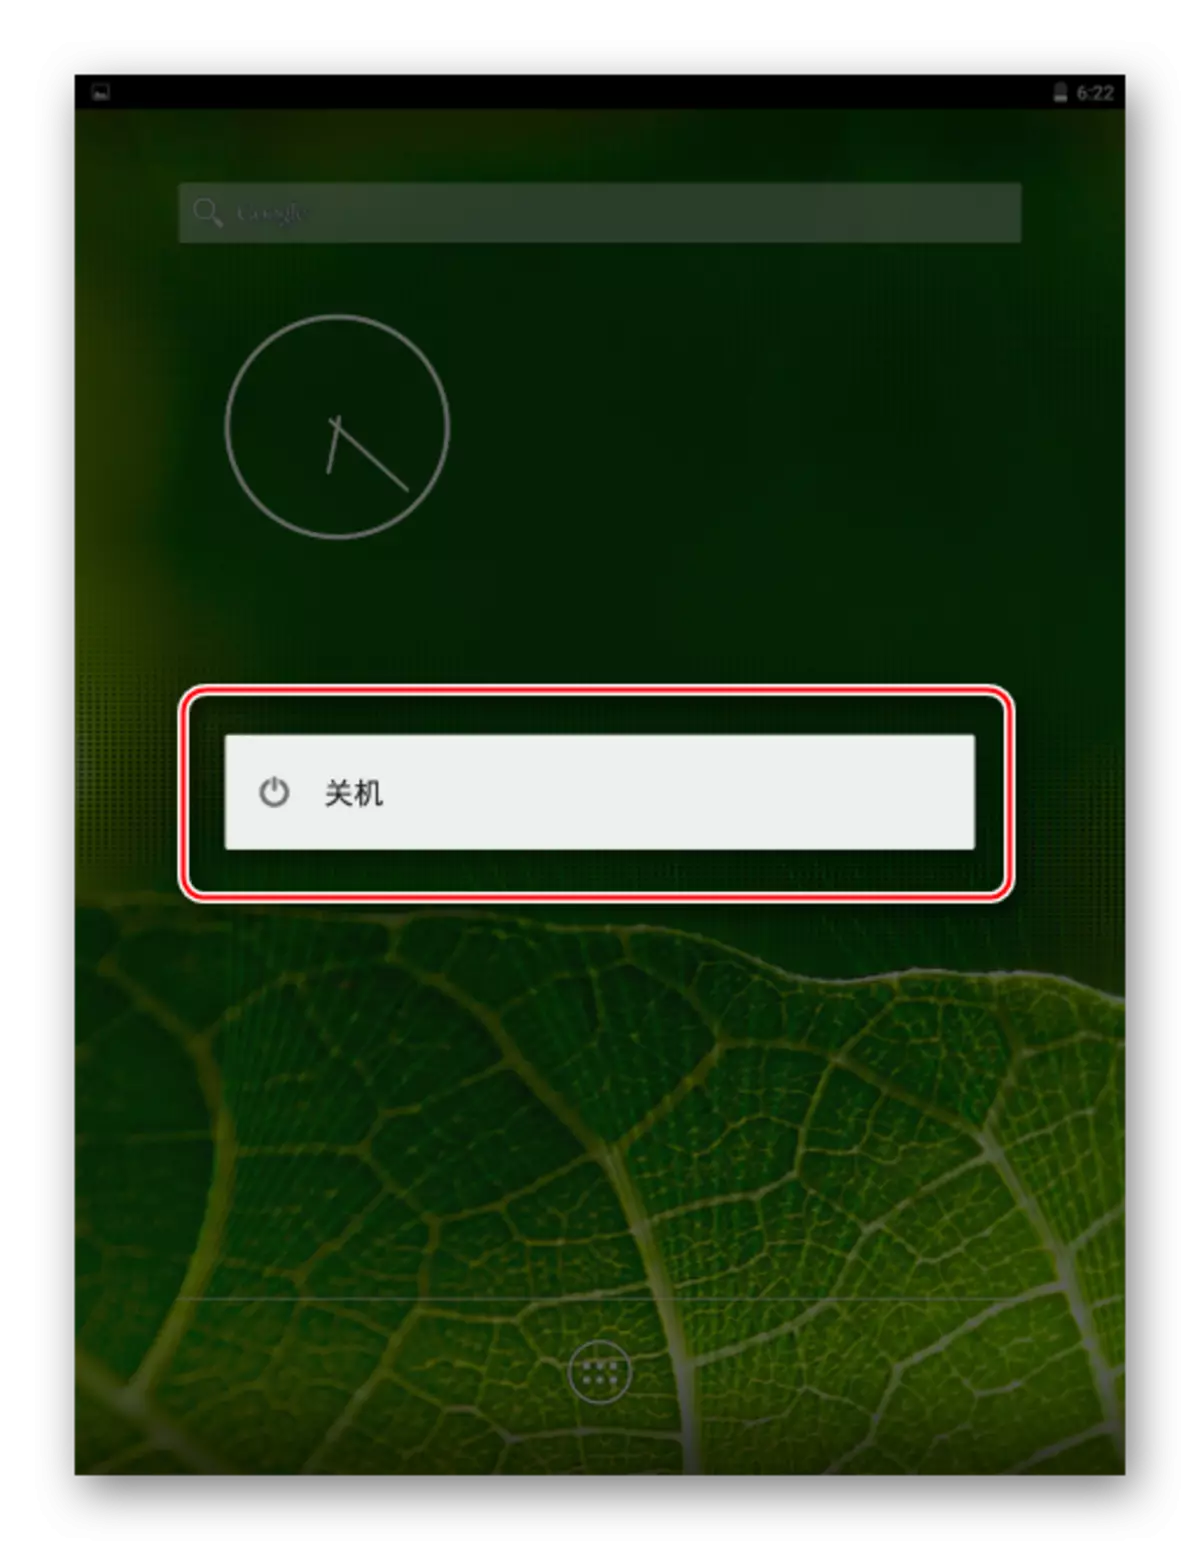 Xiaomi MIPAD 2 Cihazı Saf Android'in kontrolünde kapatma